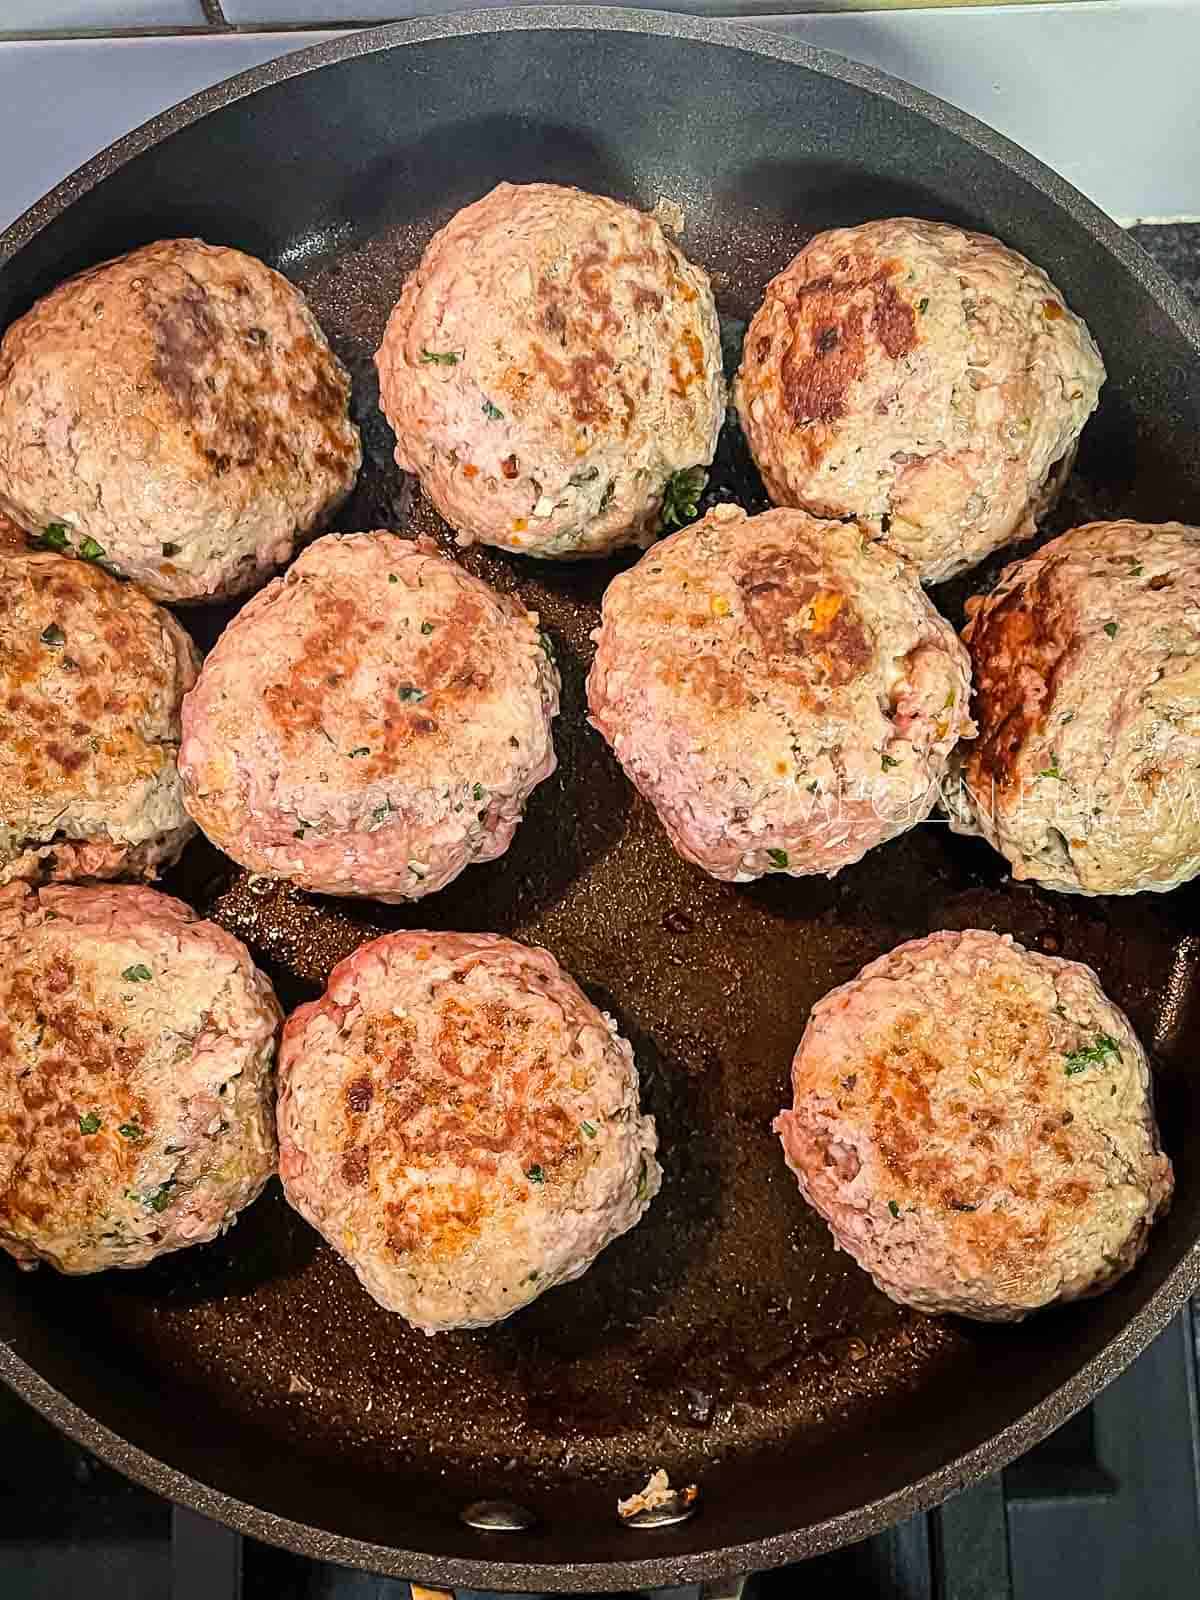 Meatballs in a frying pan.